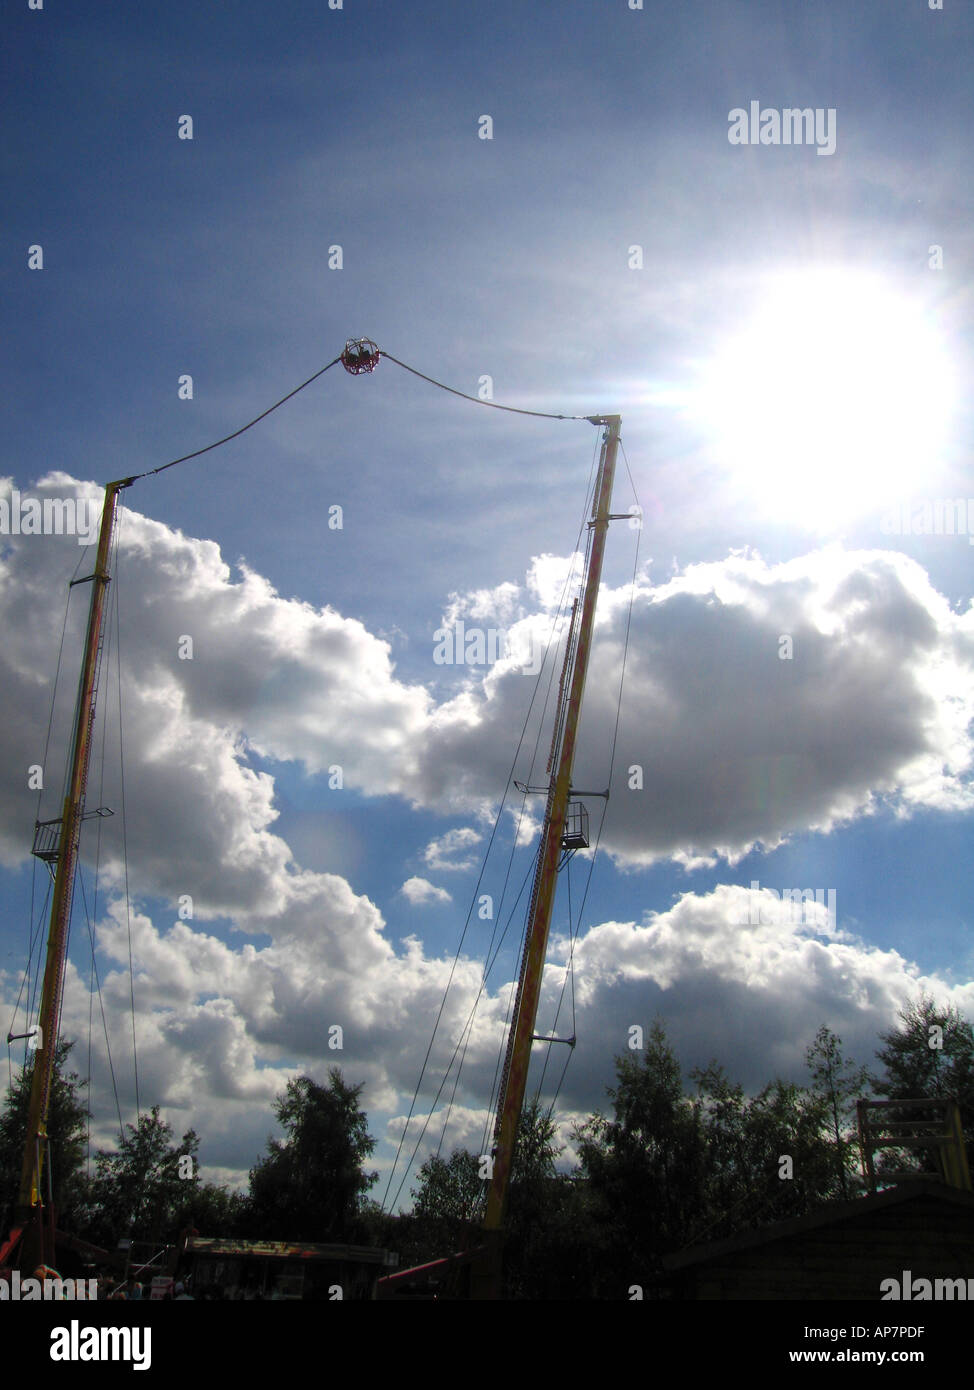 Vertical reverse bungee fairground ride Stock Photo - Alamy